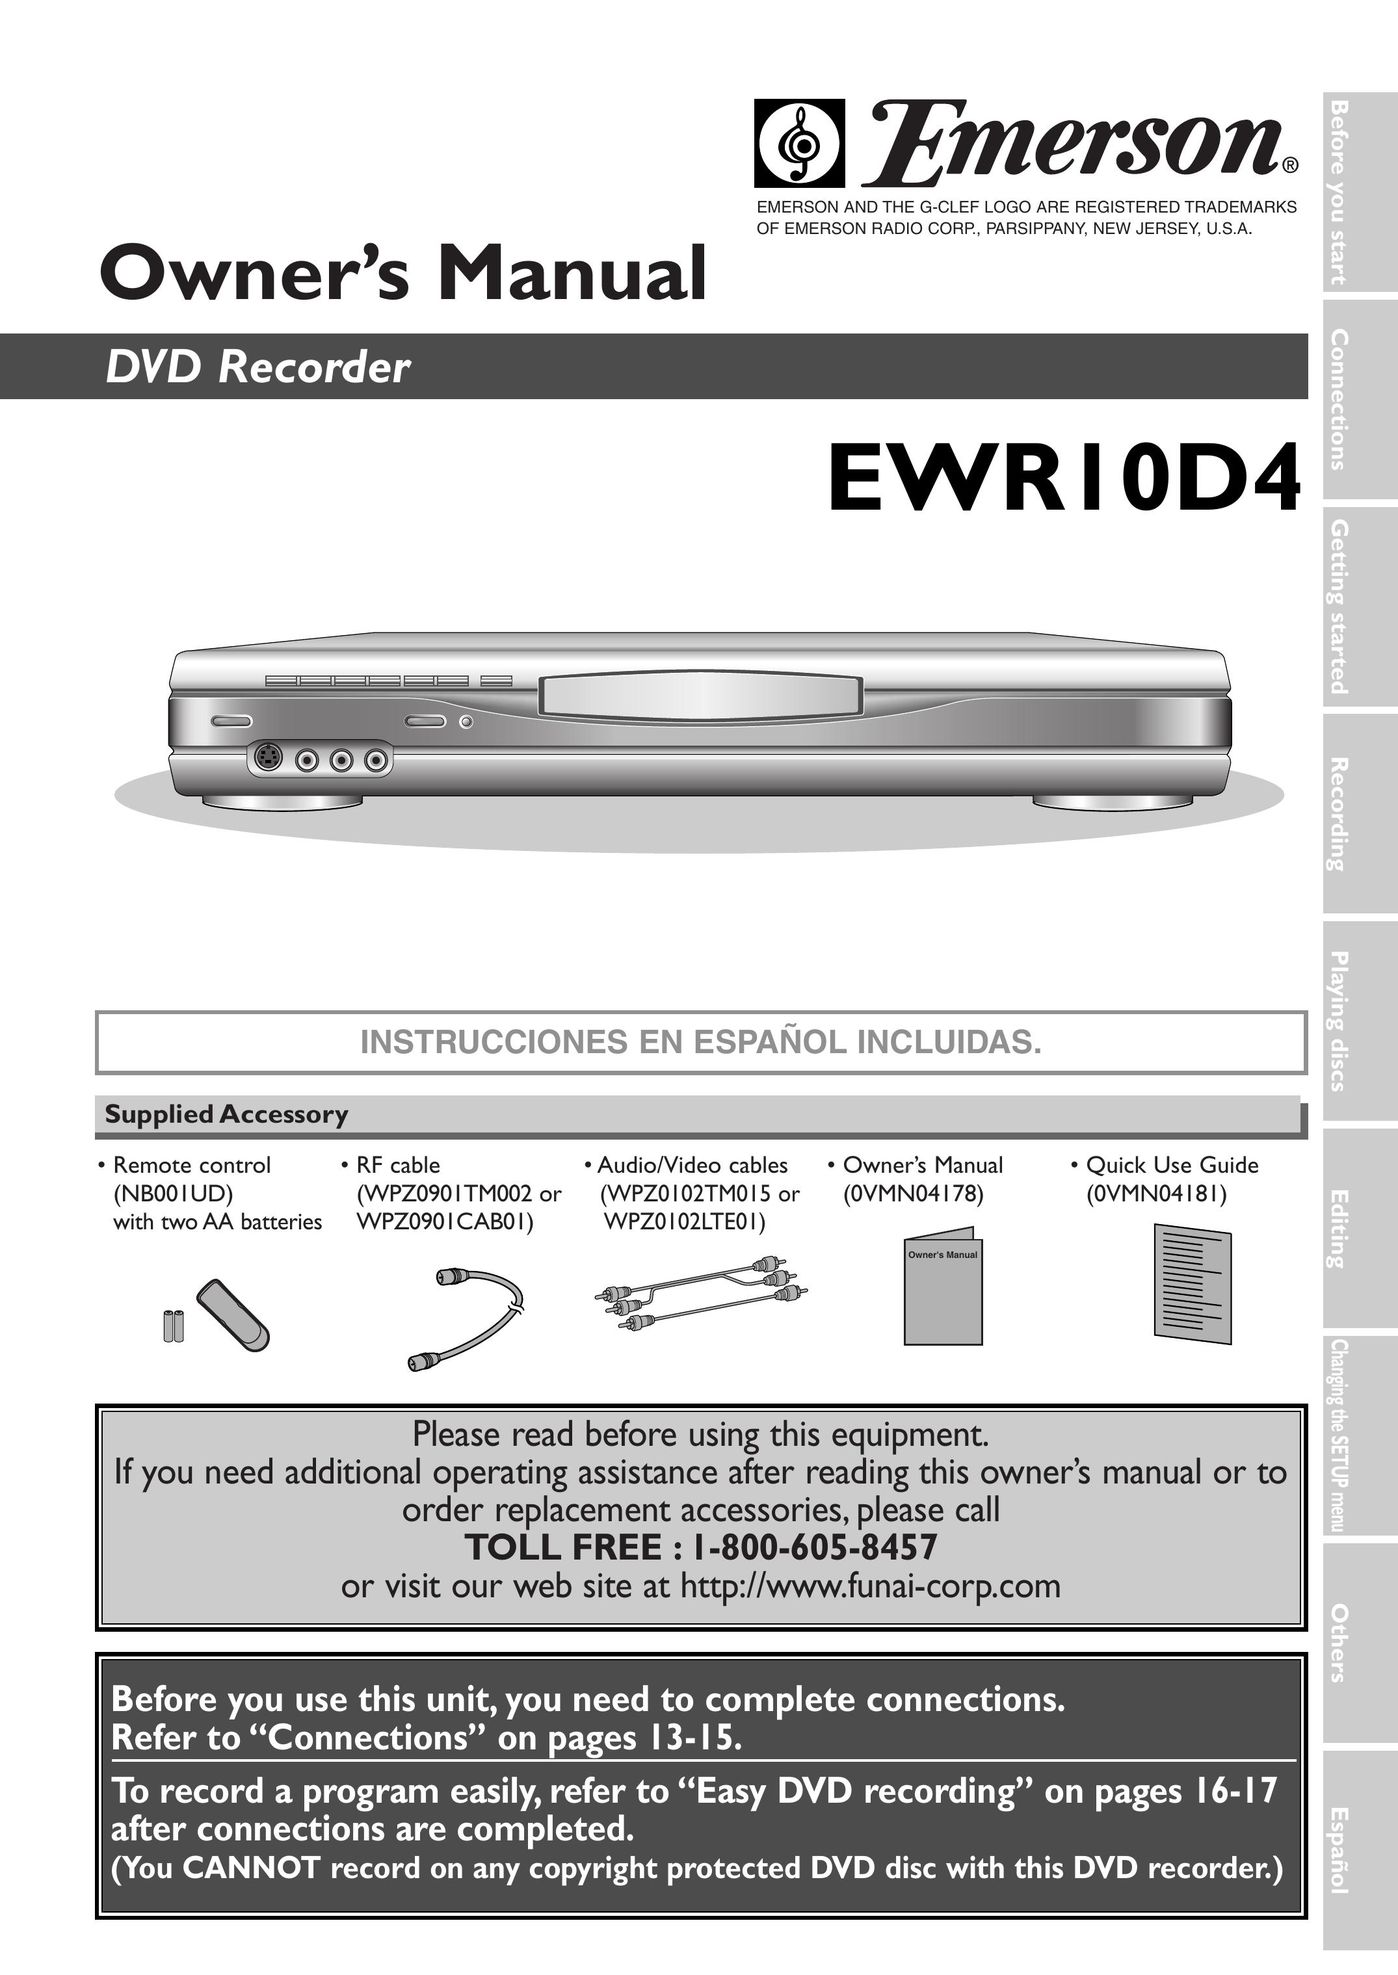 Emerson EWR10D4 DVD Recorder User Manual